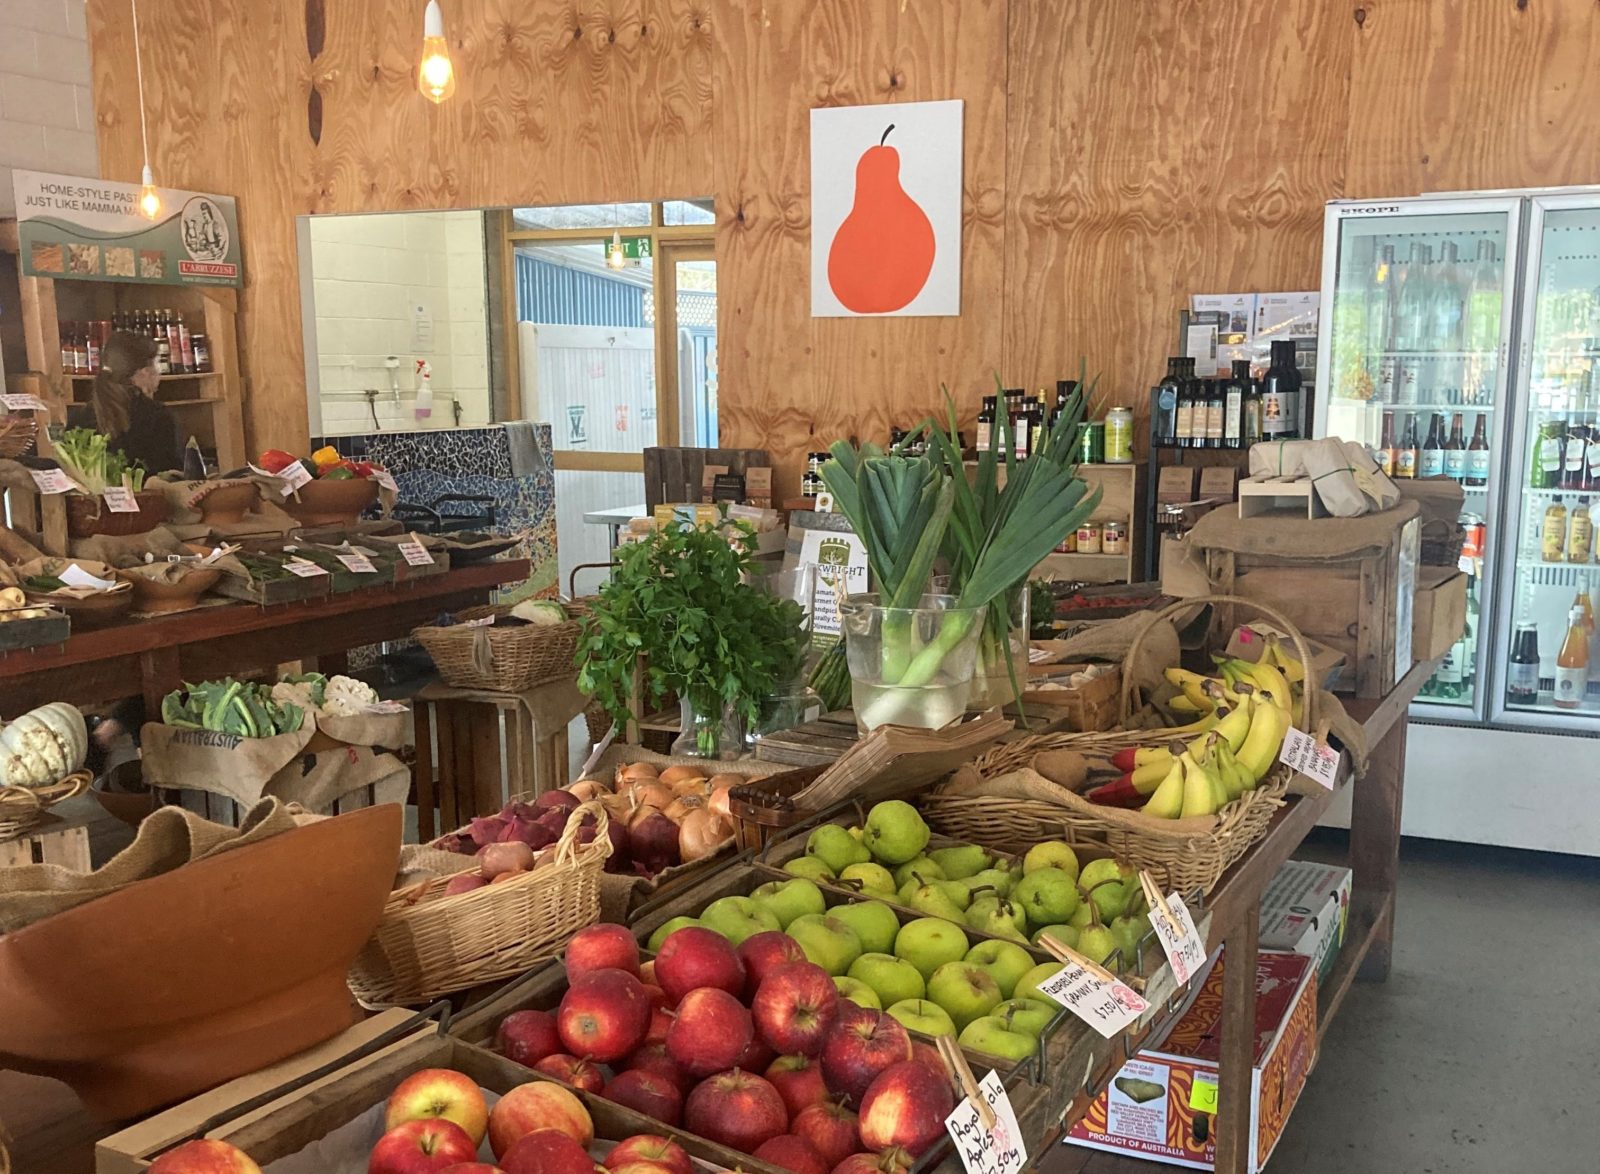 fruit and vegetables in stalls inside a shop